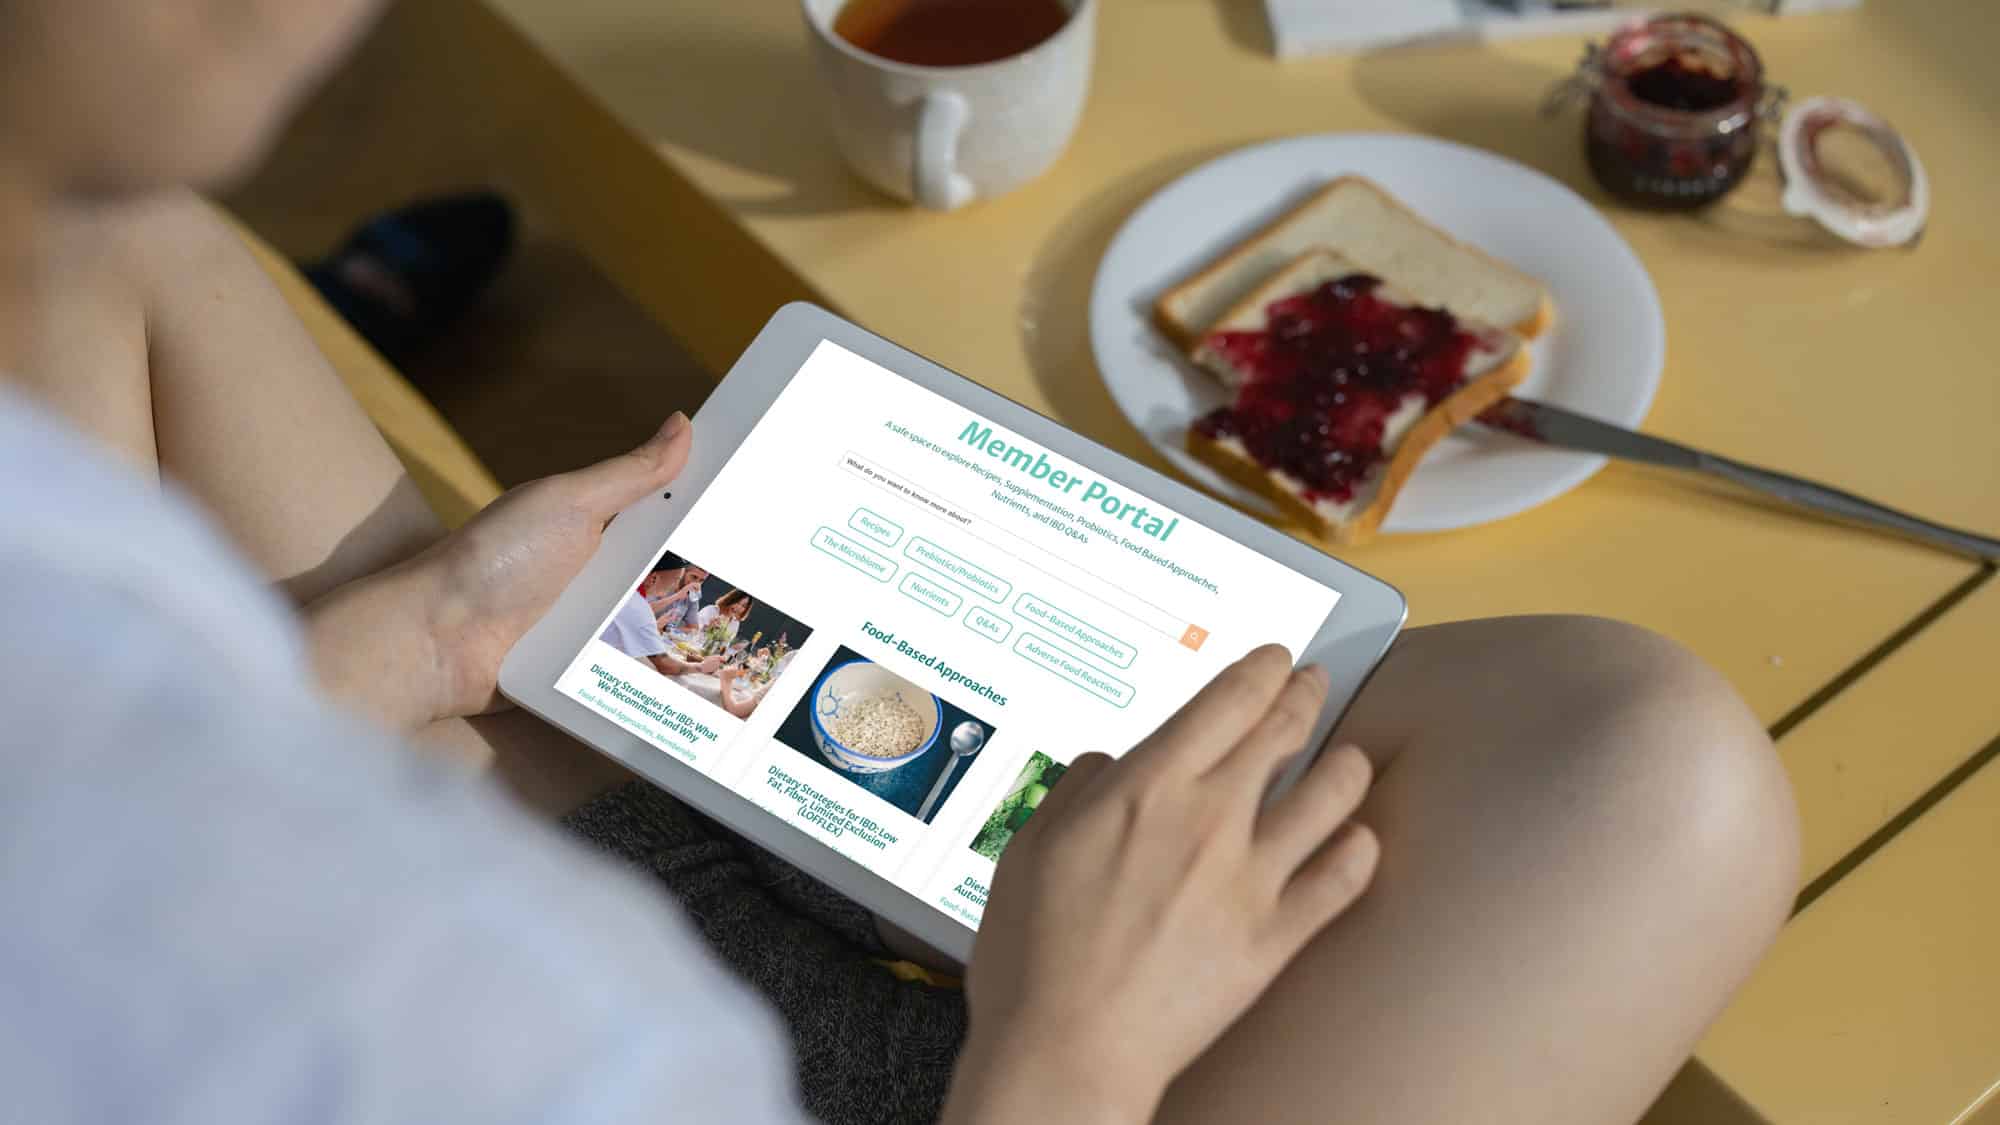 iPad screen showing IBD member portal in the hands of woman eating breakfast